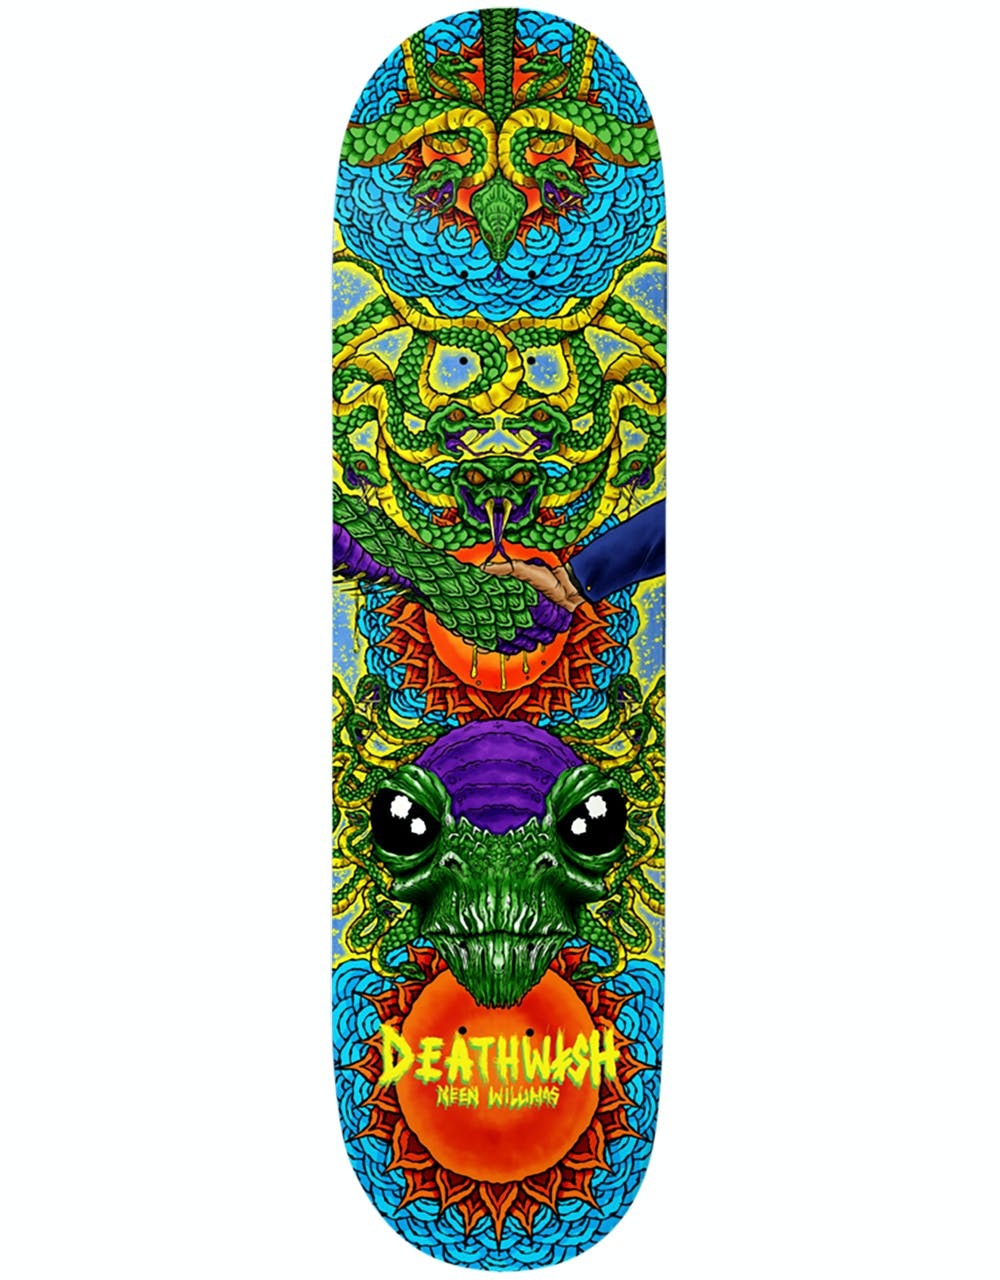 Deathwish Neen Reptilian Heritage Skateboard Deck - 8.125"